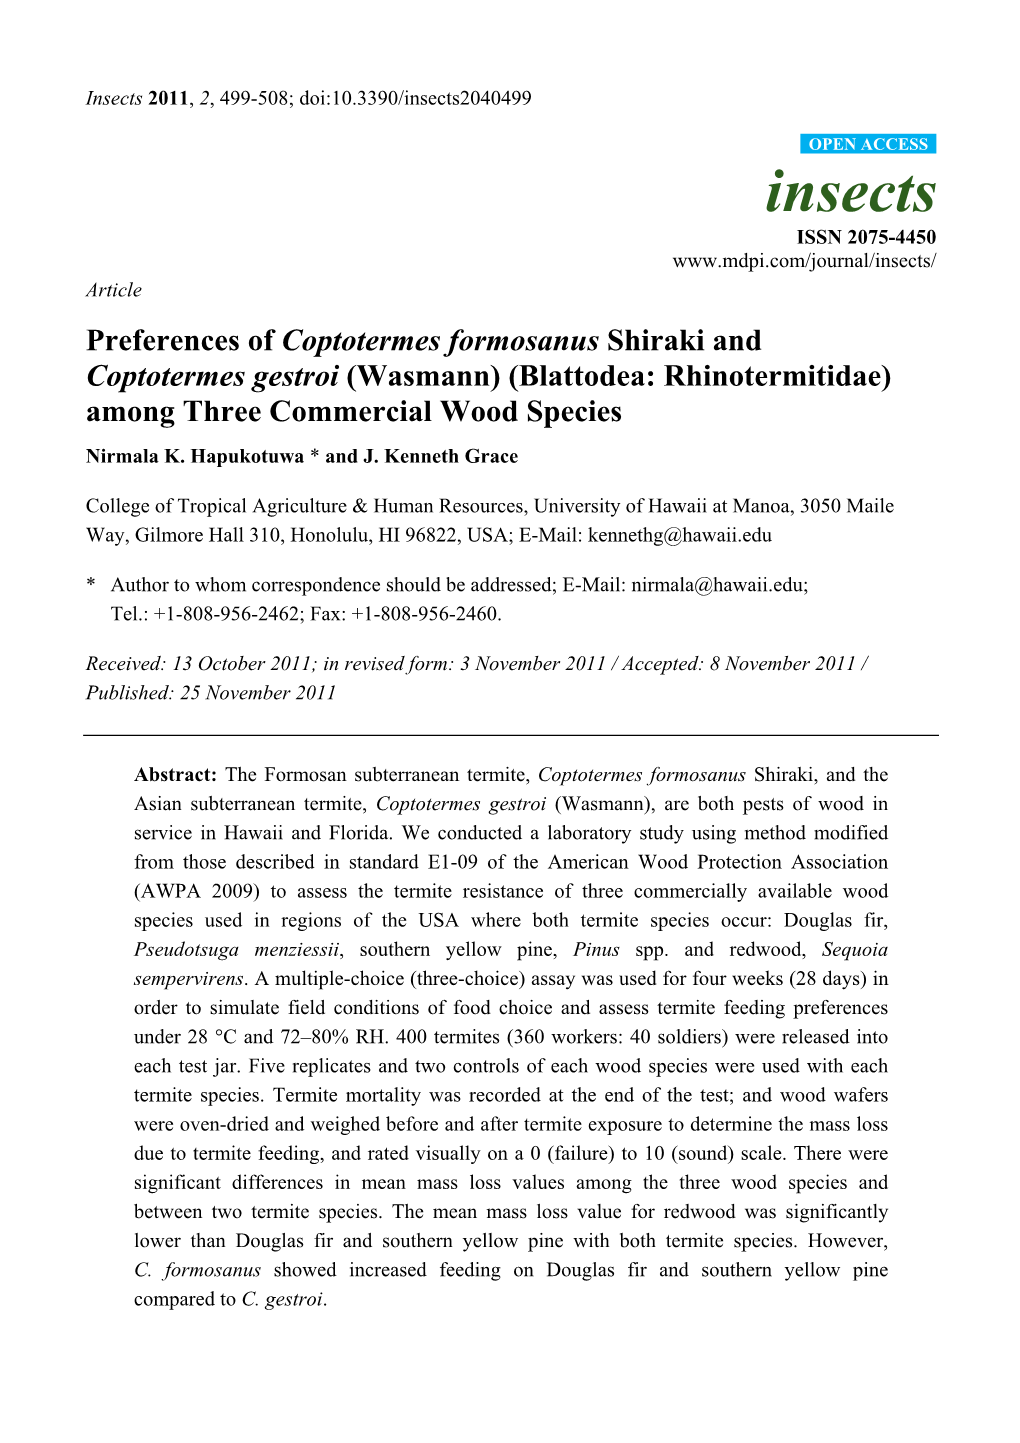 Preferences of Coptotermes Formosanus Shiraki and Coptotermes Gestroi (Wasmann) (Blattodea: Rhinotermitidae) Among Three Commercial Wood Species Nirmala K